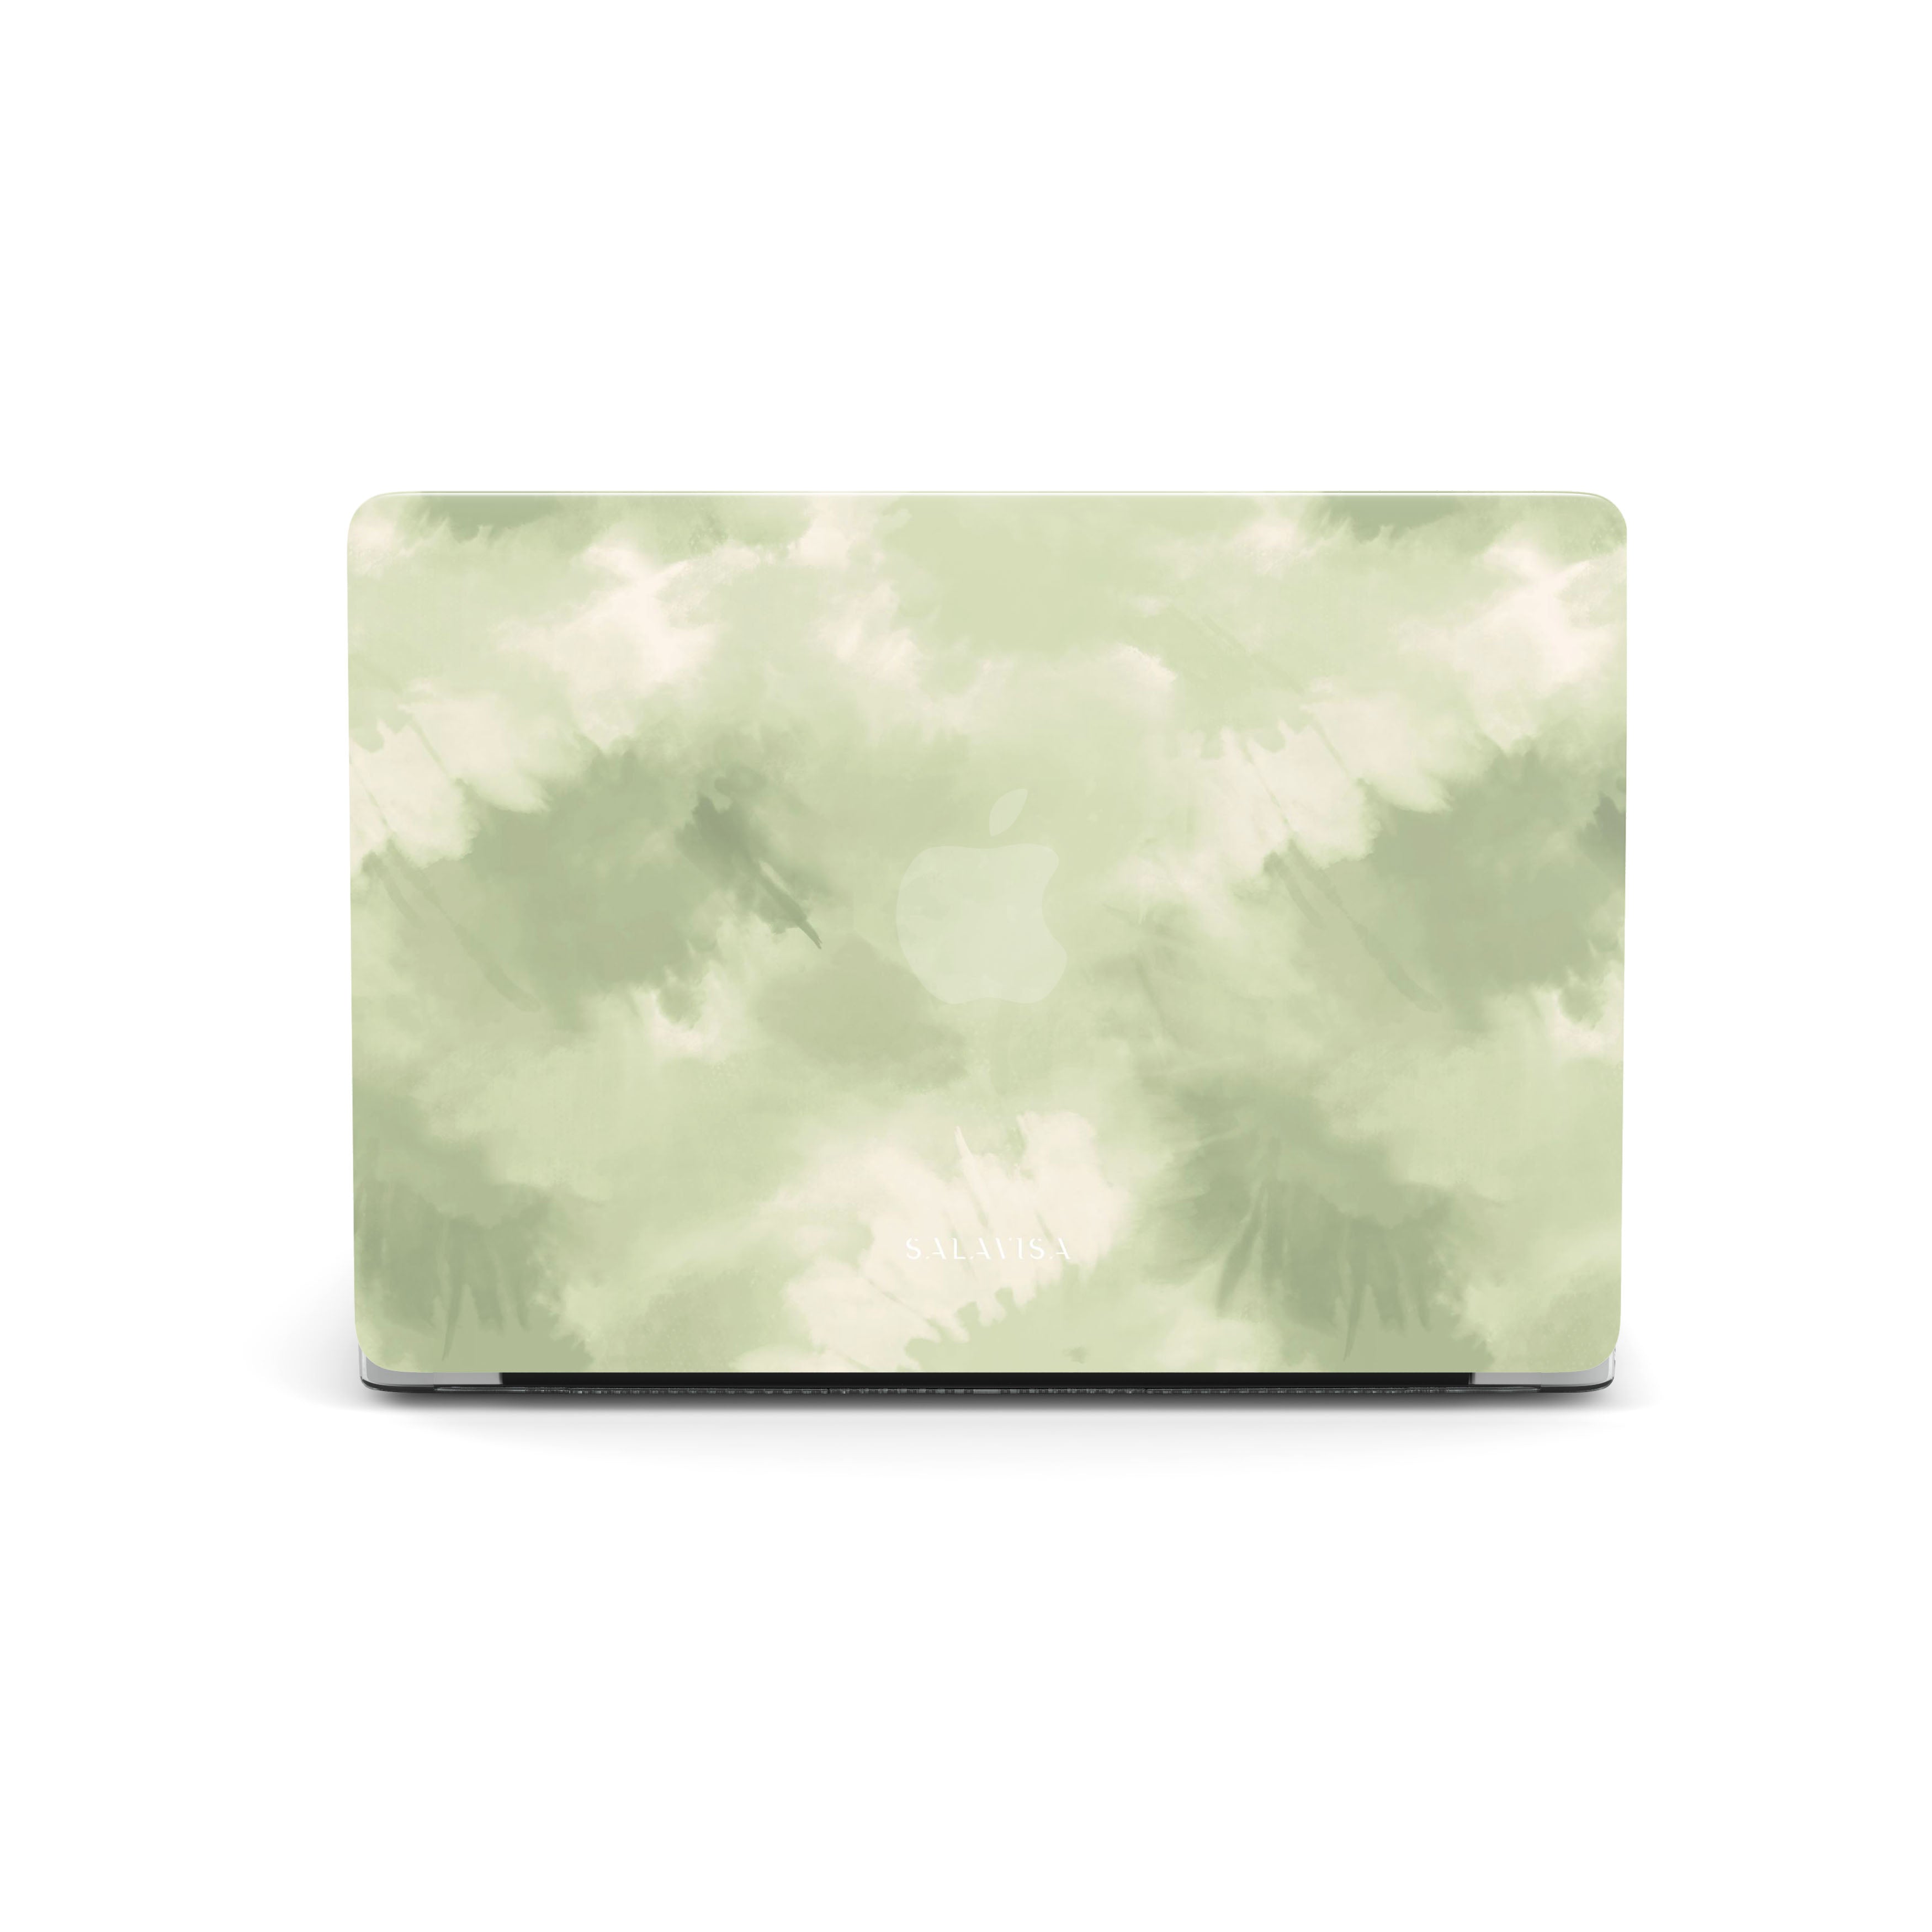 Green Cheetah MacBook Case – SALAVISA